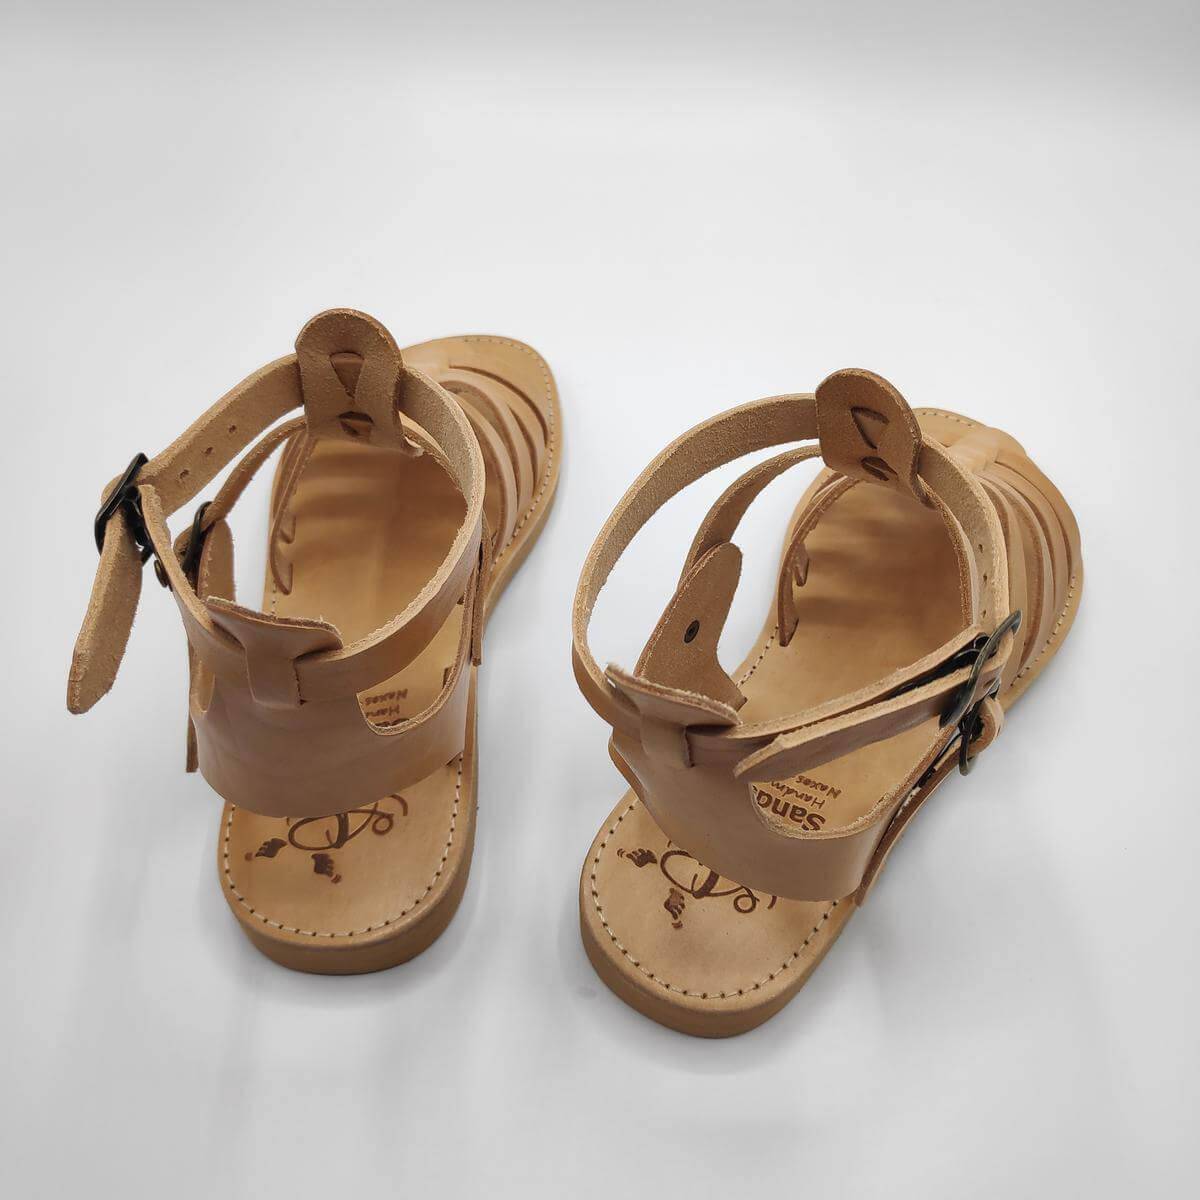 Vouno gladiator sandals for women | Pagonis Greek Sandals